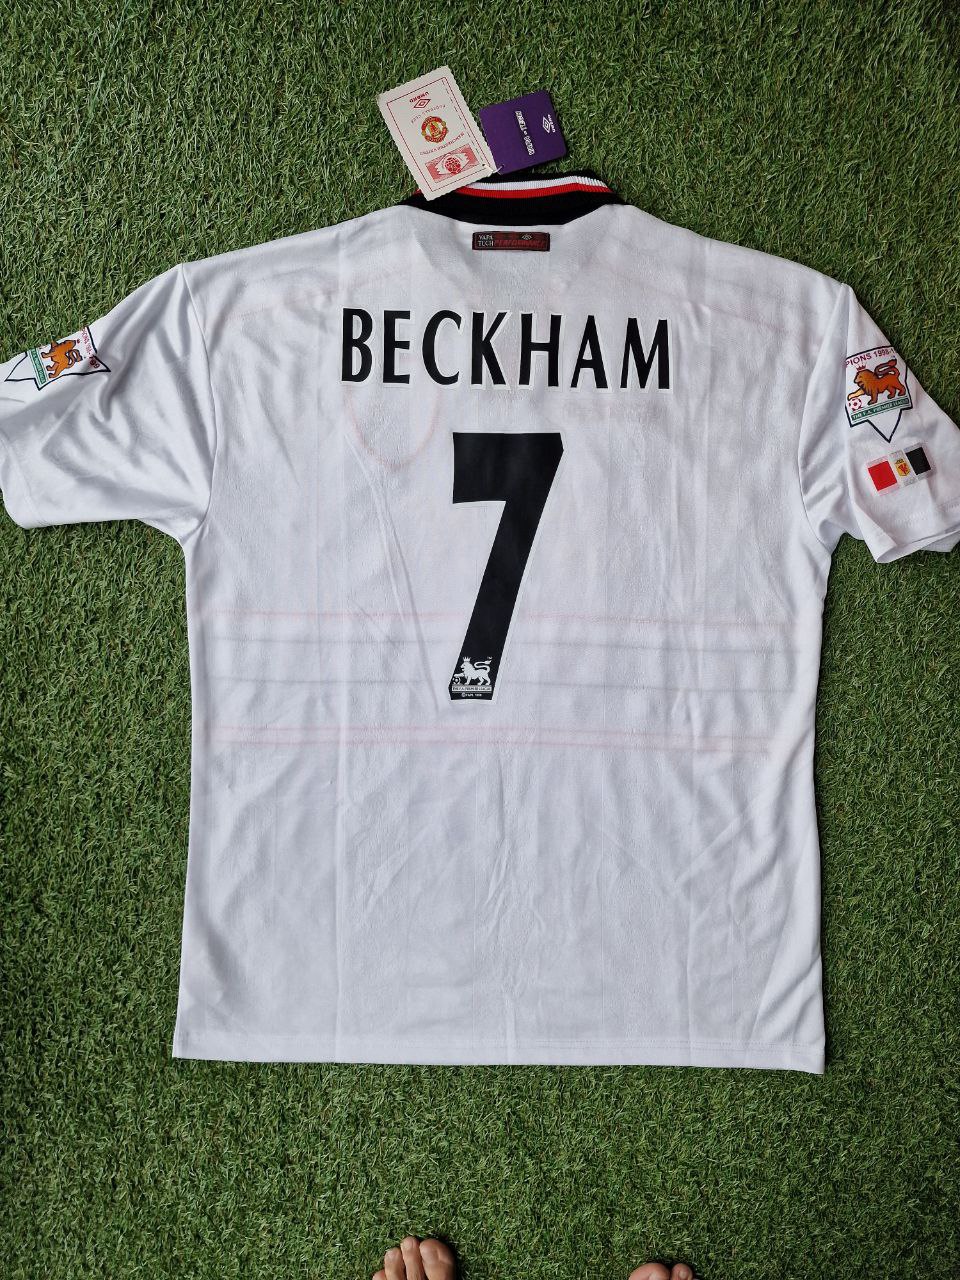 David Beckham Manchester United White Retro Football Jersey